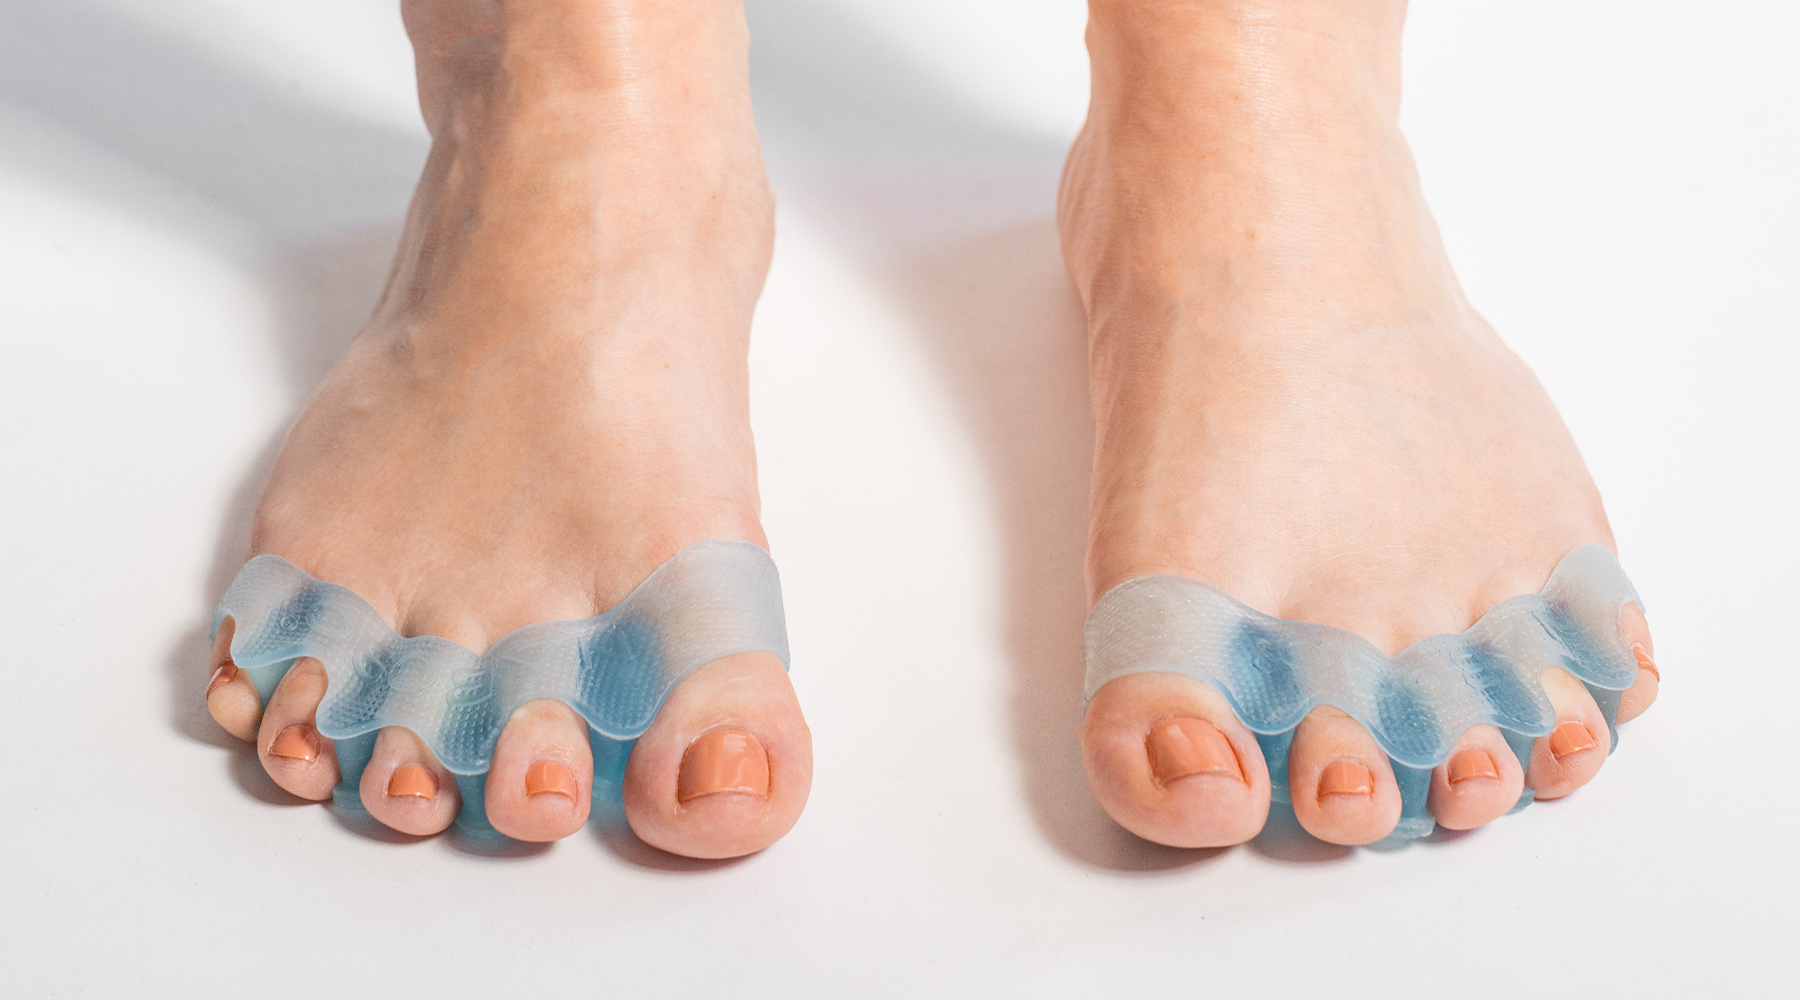 Healthy Toe Socks - Toe Alignment Socks - Textured Naboso Socks